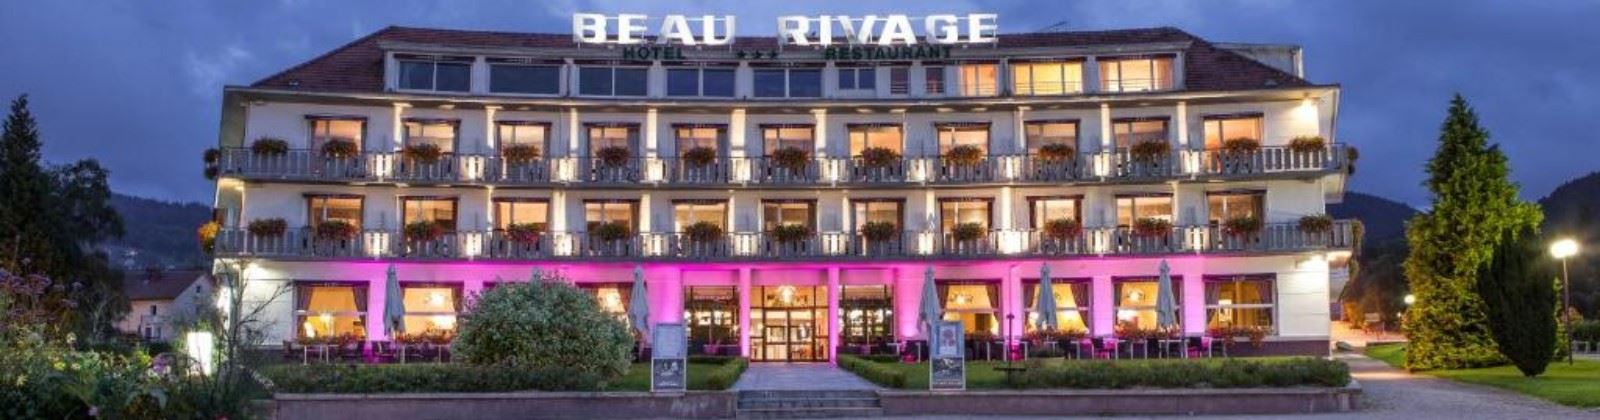 hotel beau rivage olevene restaurant seminaire booking 